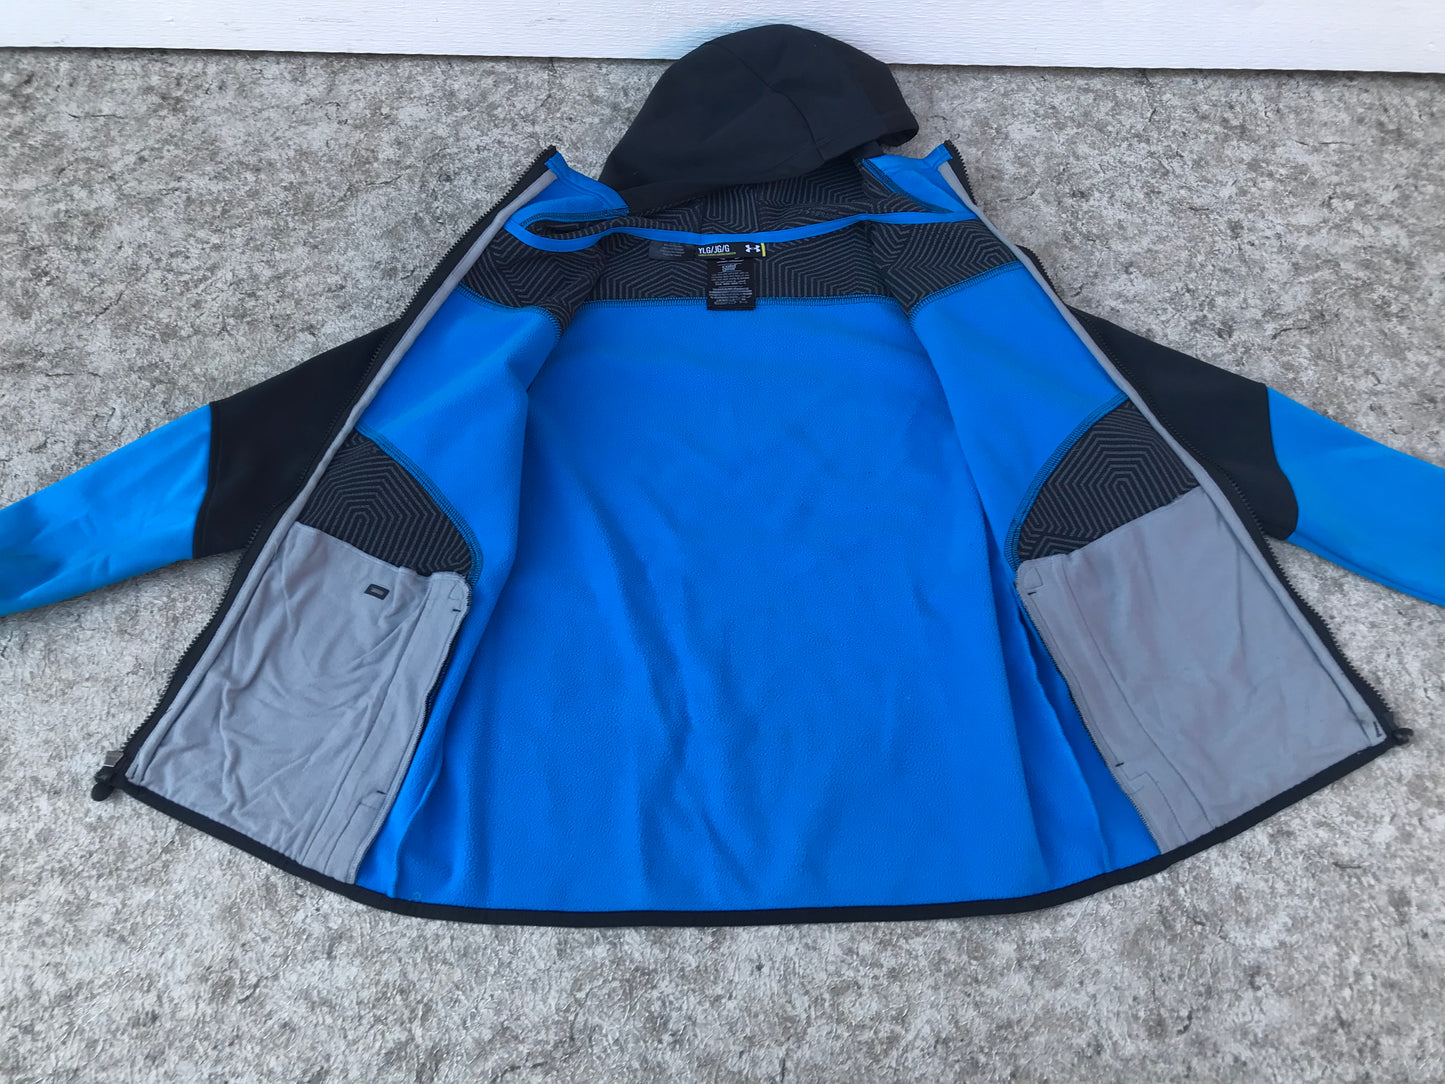 Hoodie Zip Up Child Size 10-12 Light Weight Fleece Lined Under Armour Blue Black PT 3440